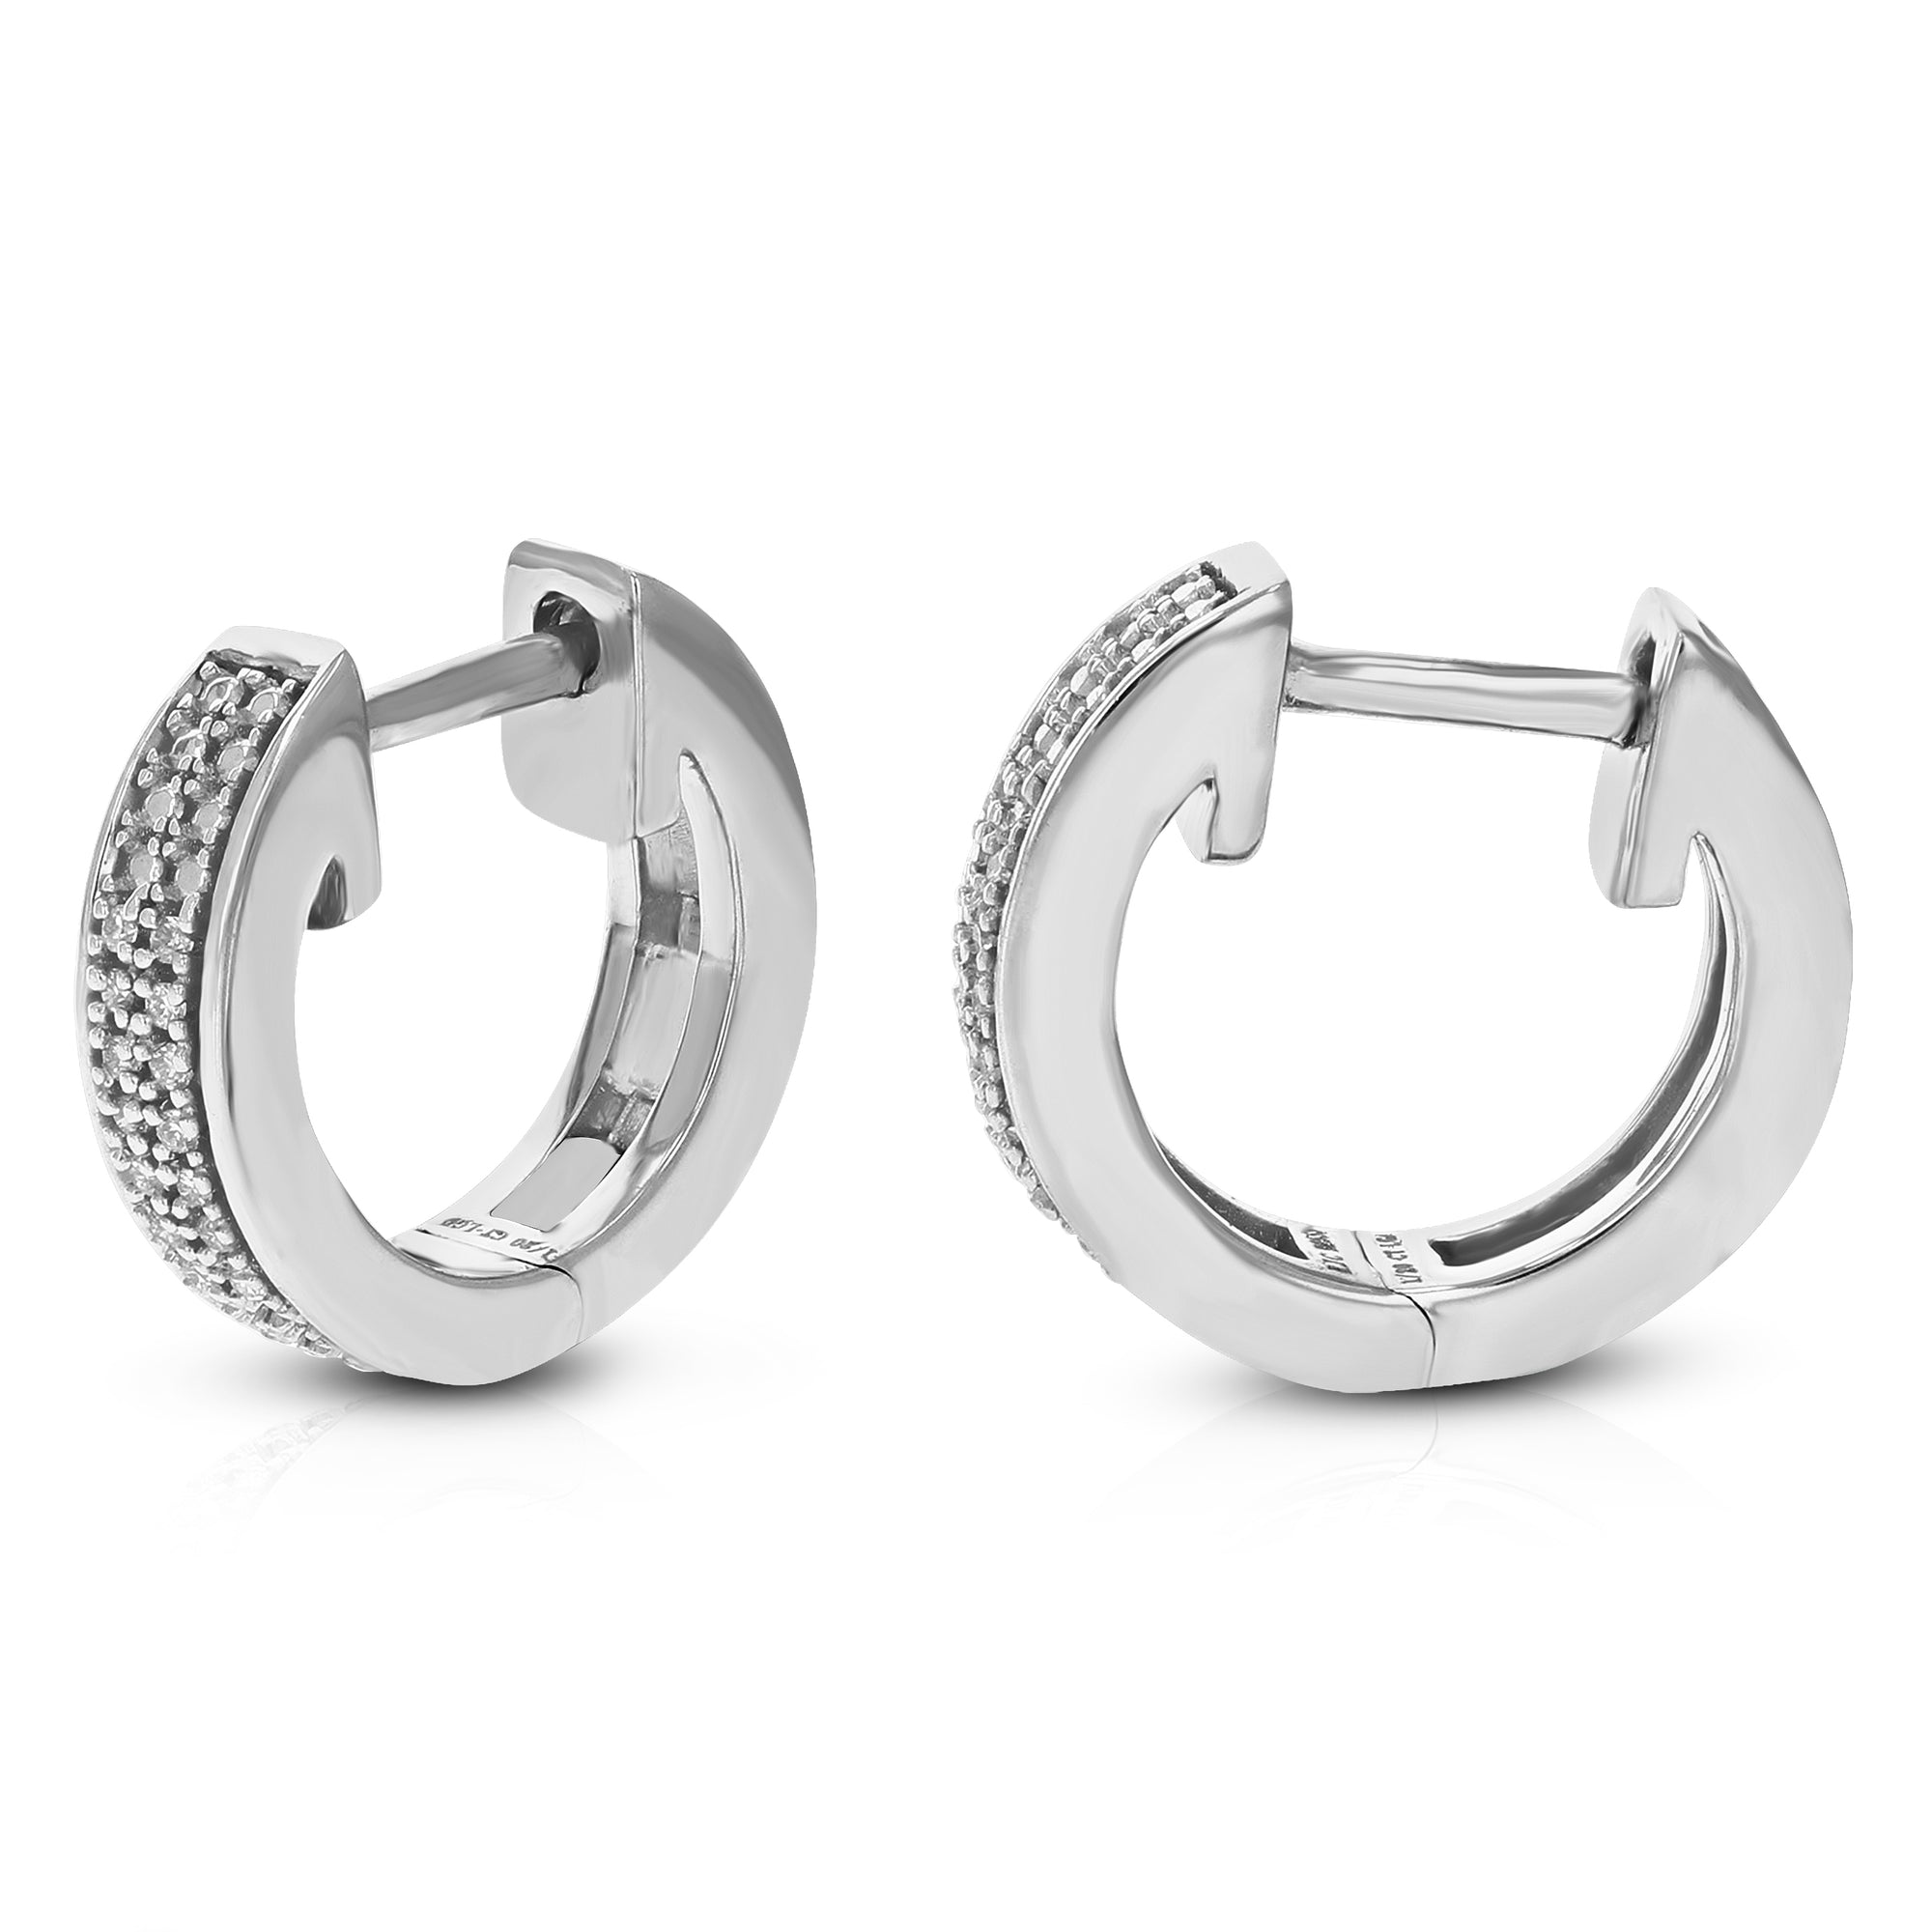 1/20 cttw Diamond Hoop Earrings for Women, Round Lab Grown Diamond Earrings in .925 Sterling Silver, Prong Setting, 1/2 Inch